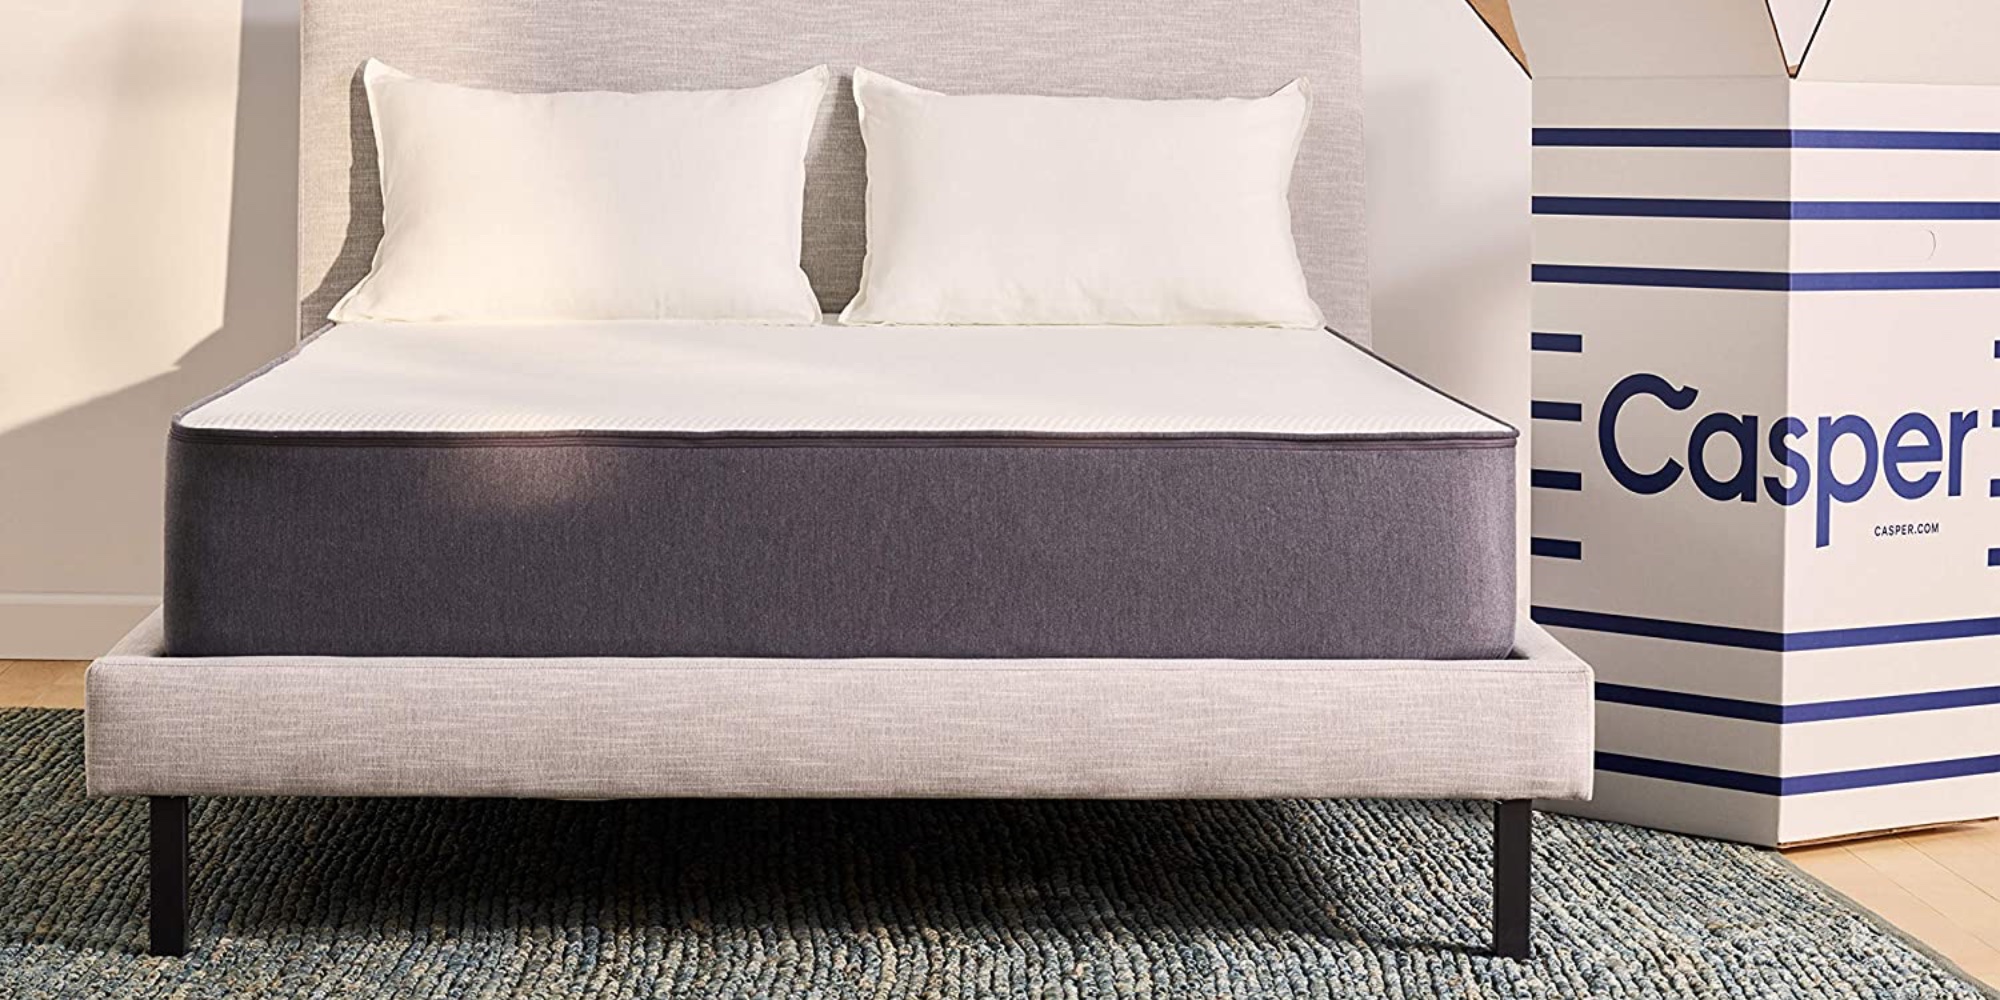 original foam casper sleep mattress size: twin